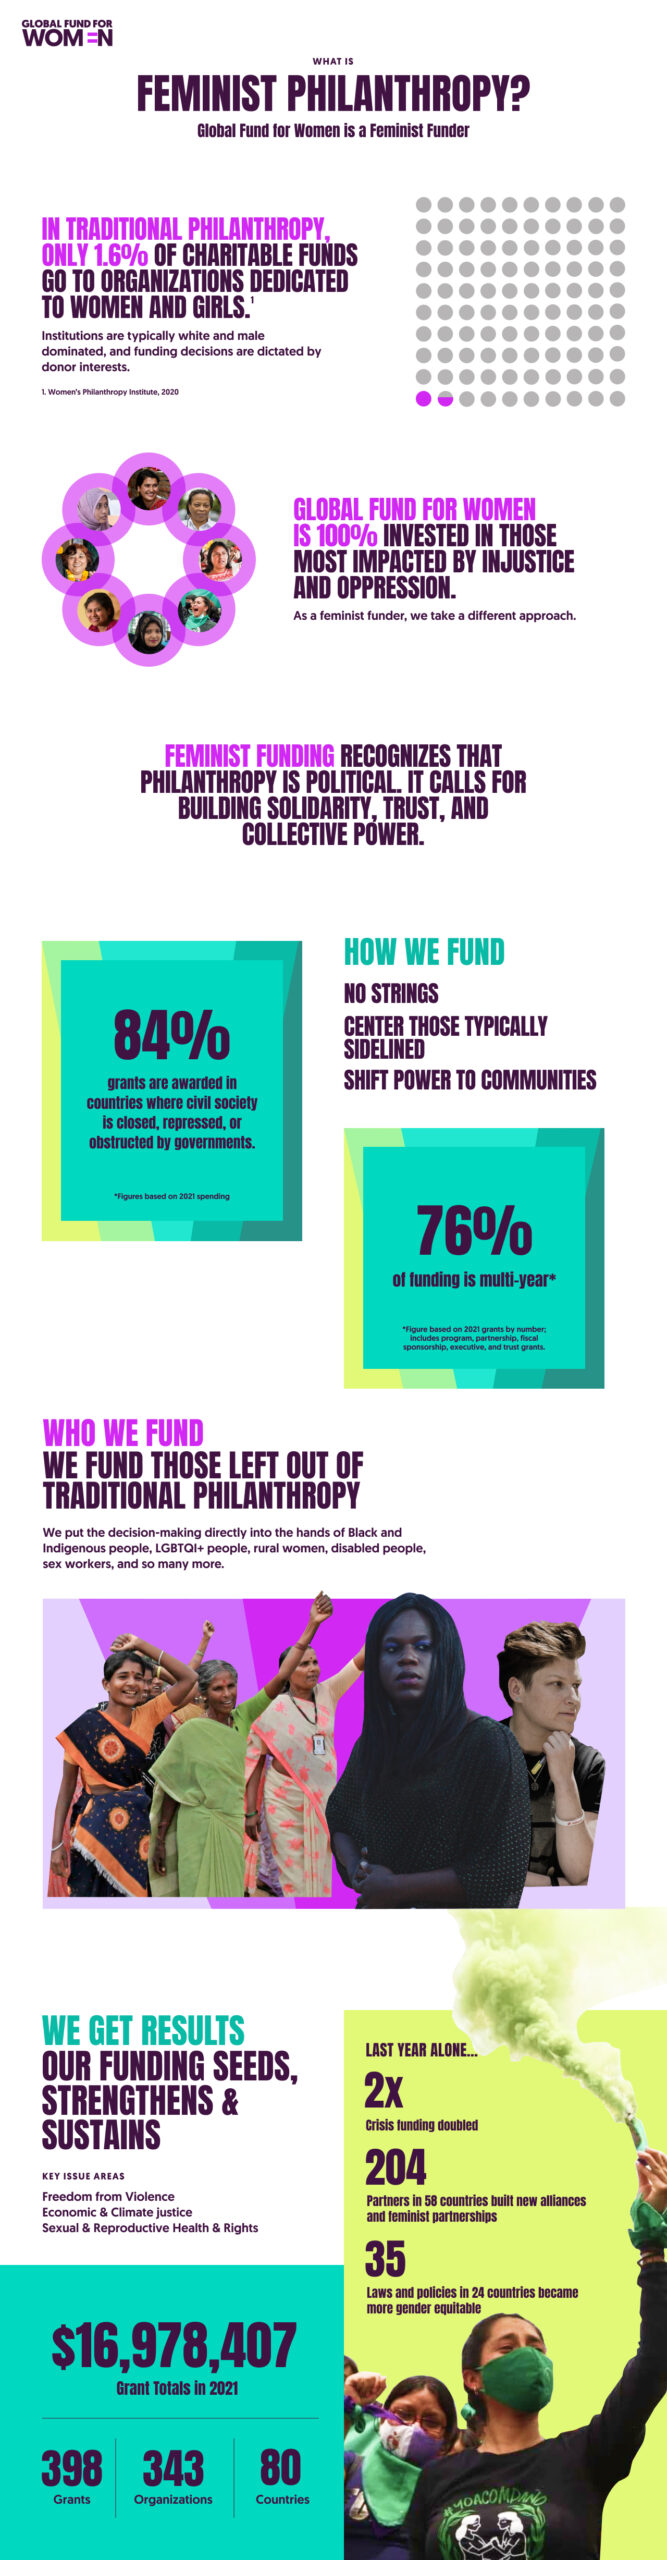 feminist-philanthropy-infographic-global-fund-for-women